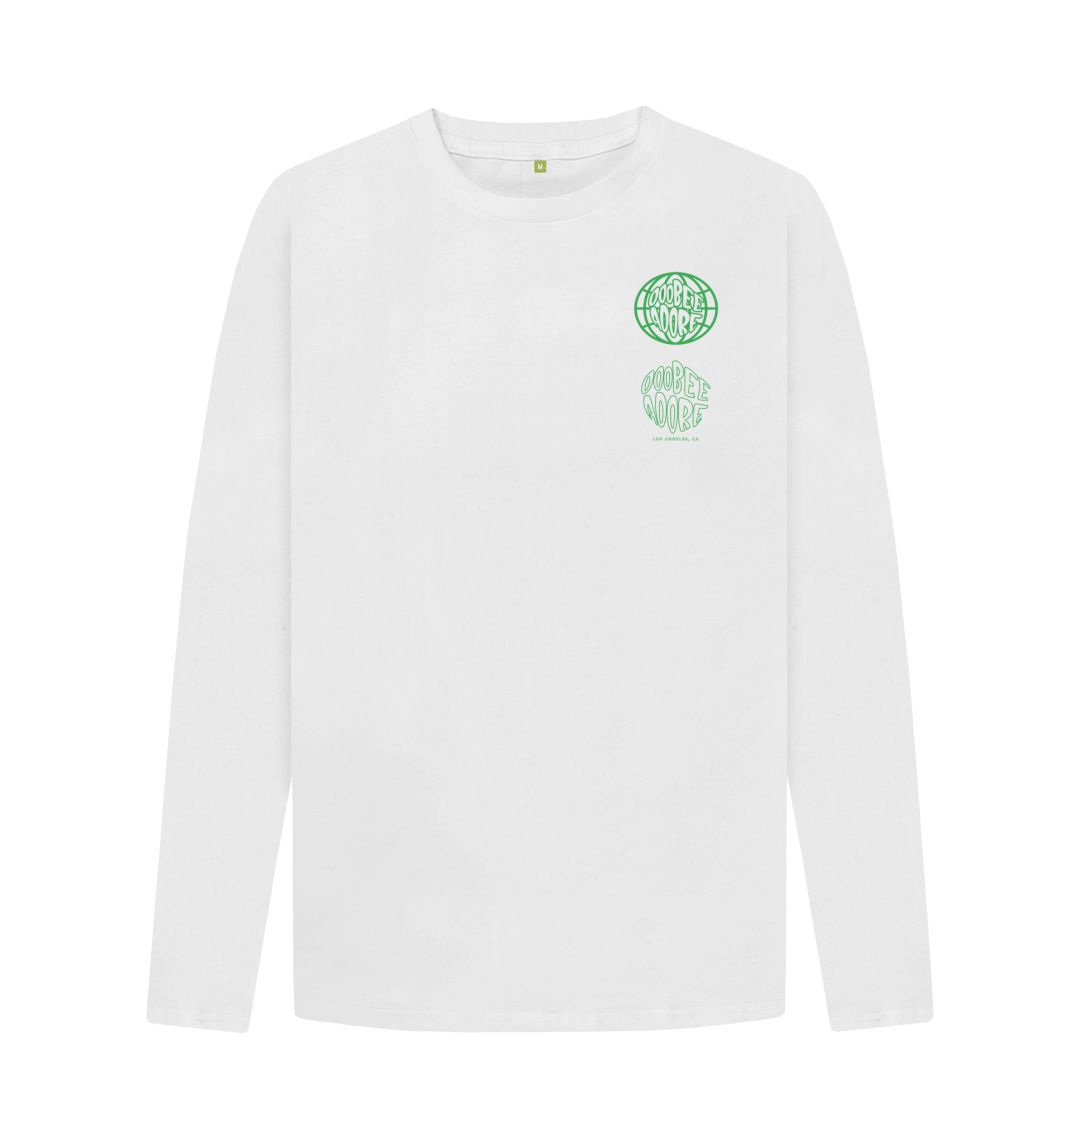 White Doobee Adore World Los Angeles Green Logo Sweatshirt